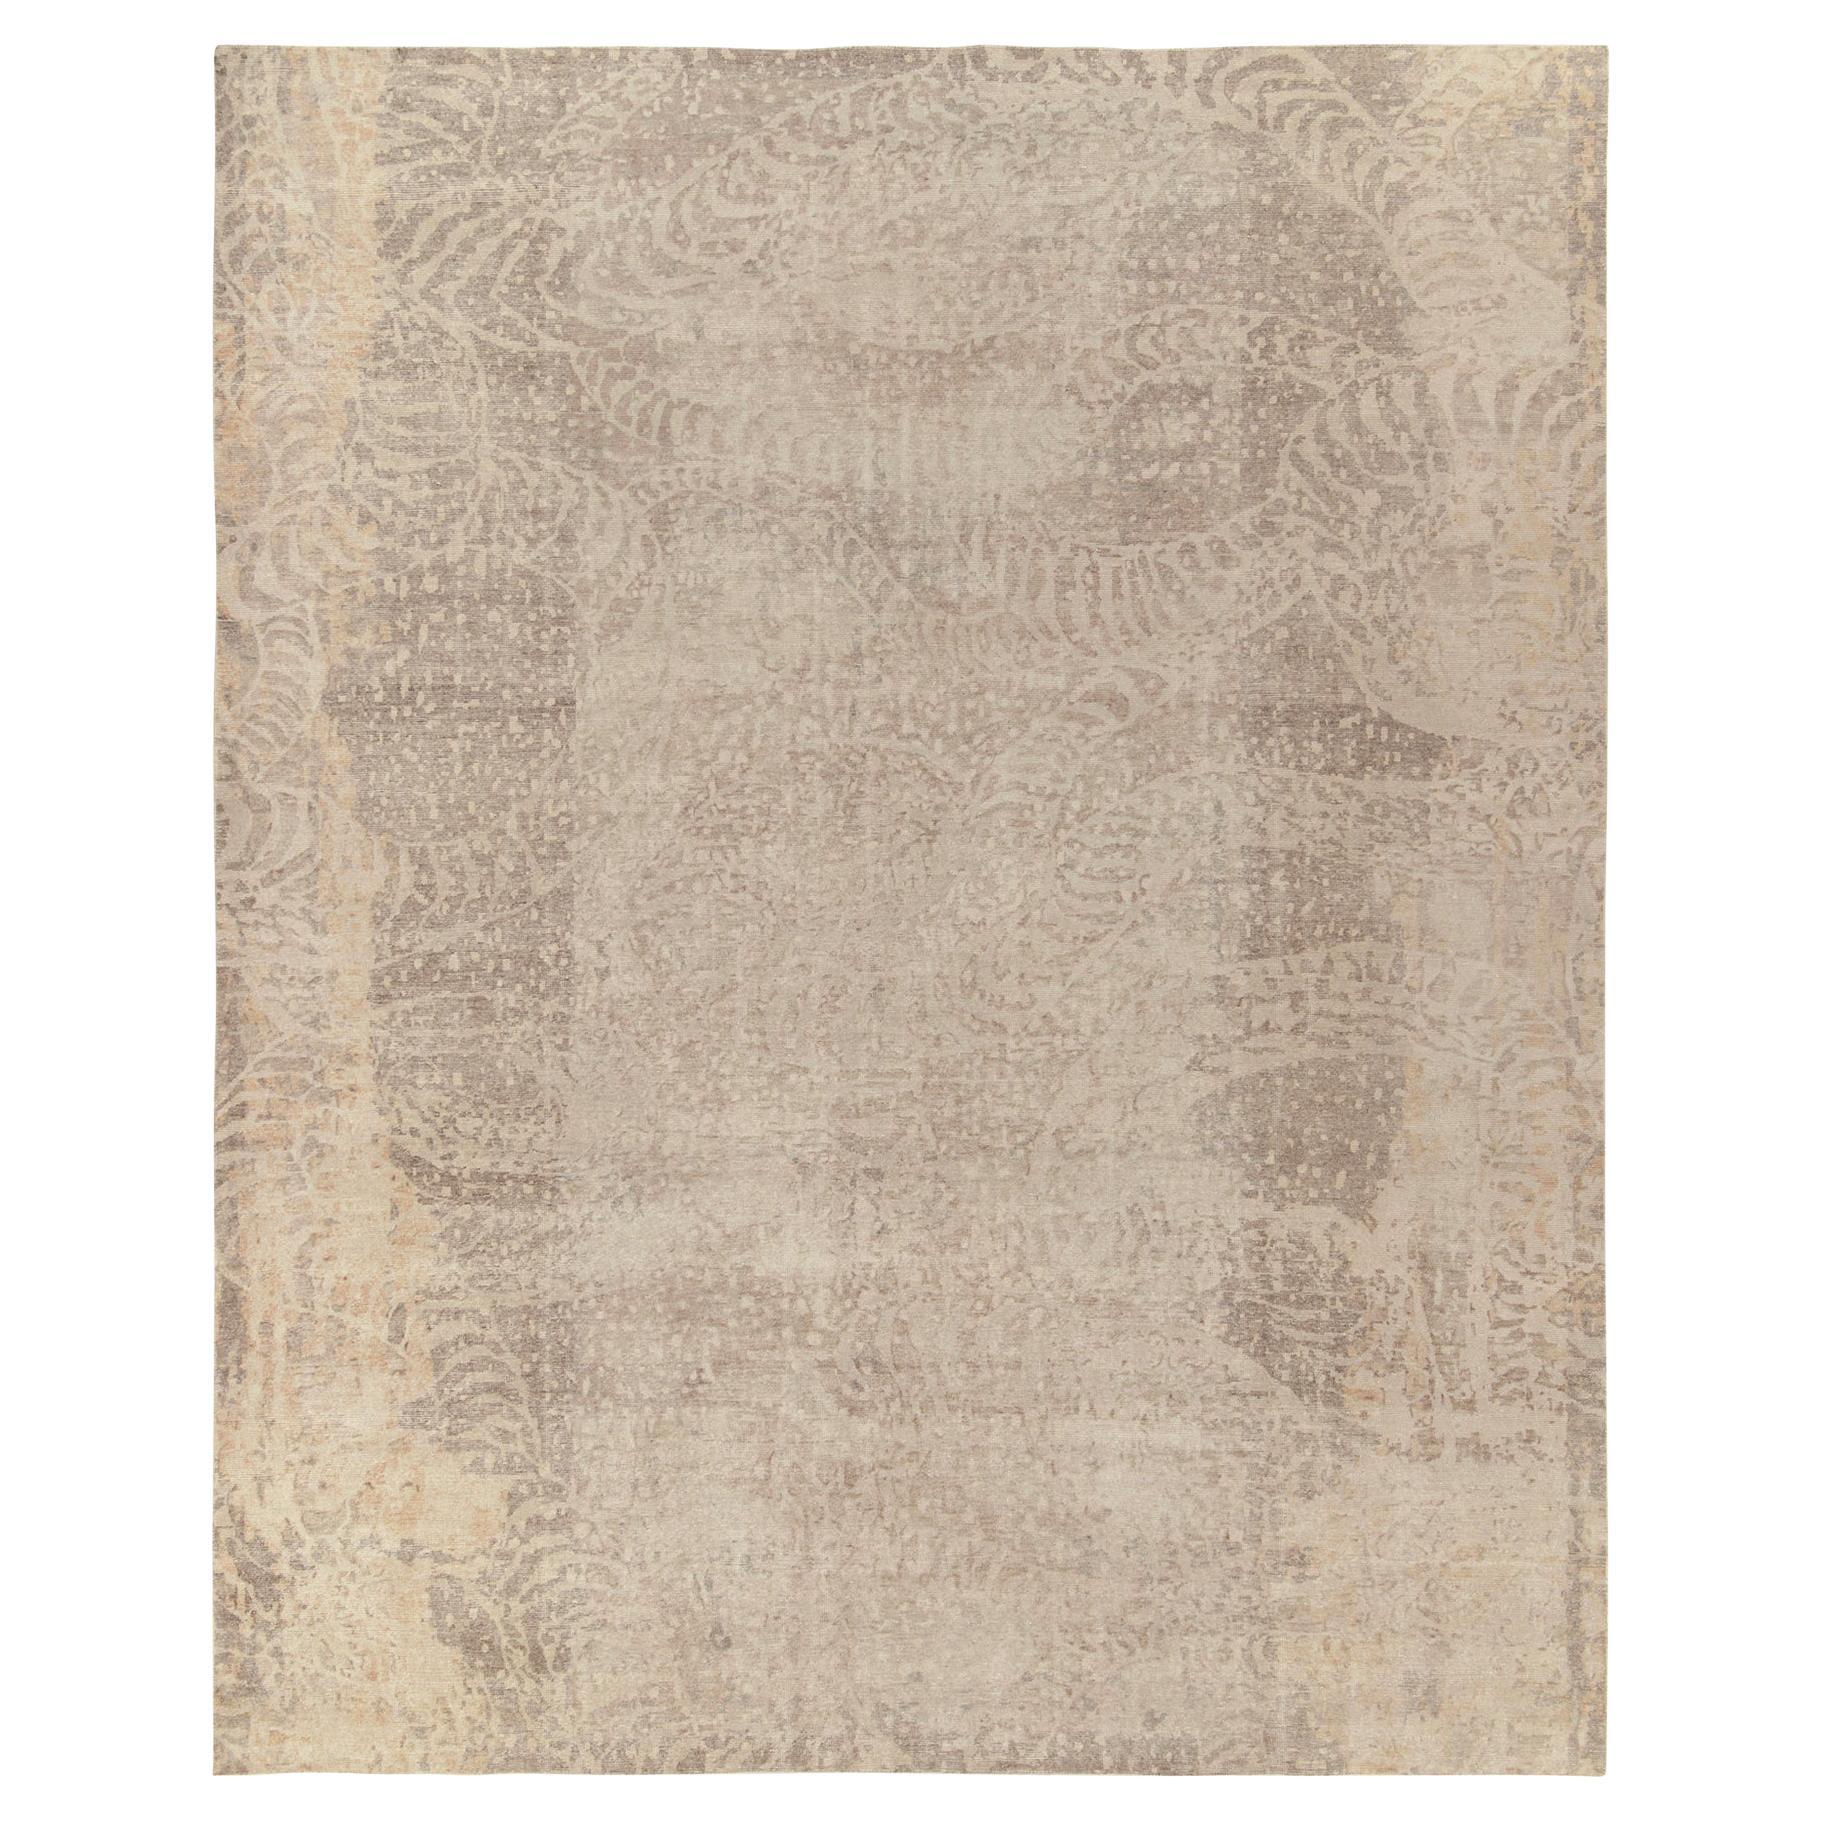 Rug & Kilim's Distressed Style Abstract Rug in Beige-Brown & Gray Pattern (Tapis abstrait en beige, marron et gris)